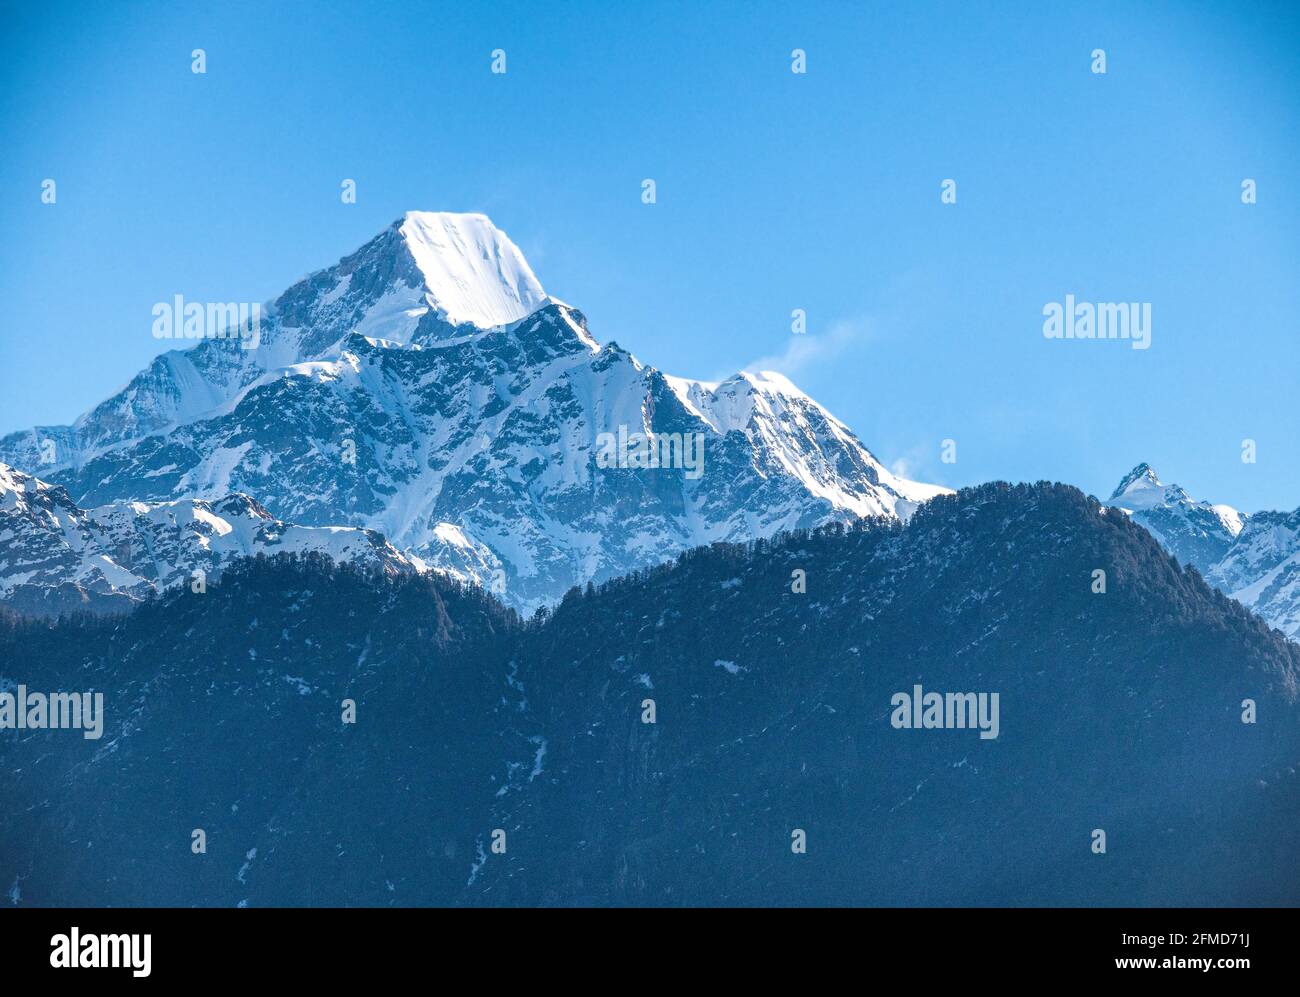 Le magnifique pic de Nanda Kot (6861m) dans le himalaya occidental d'Uttarakhand Nord de l'Inde Banque D'Images